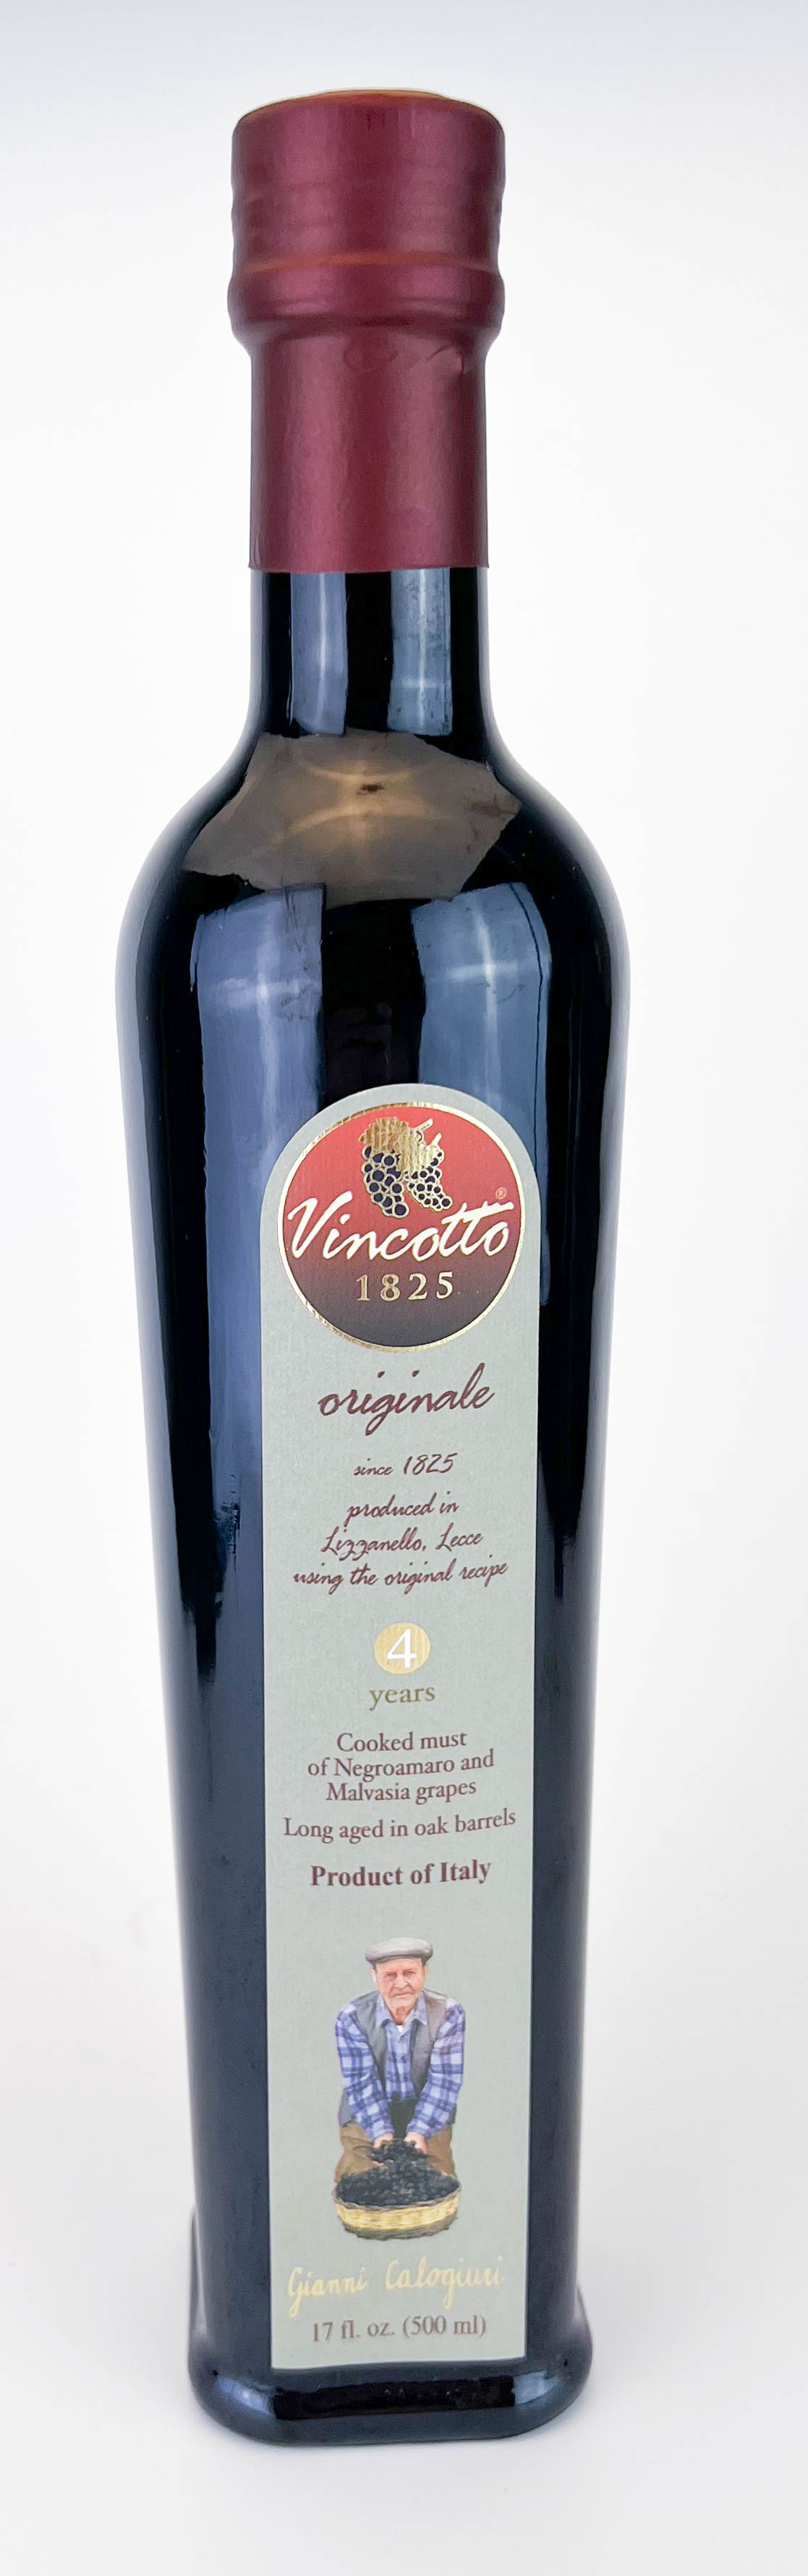 Vincotto ® ORIGINALE 500ml bottle